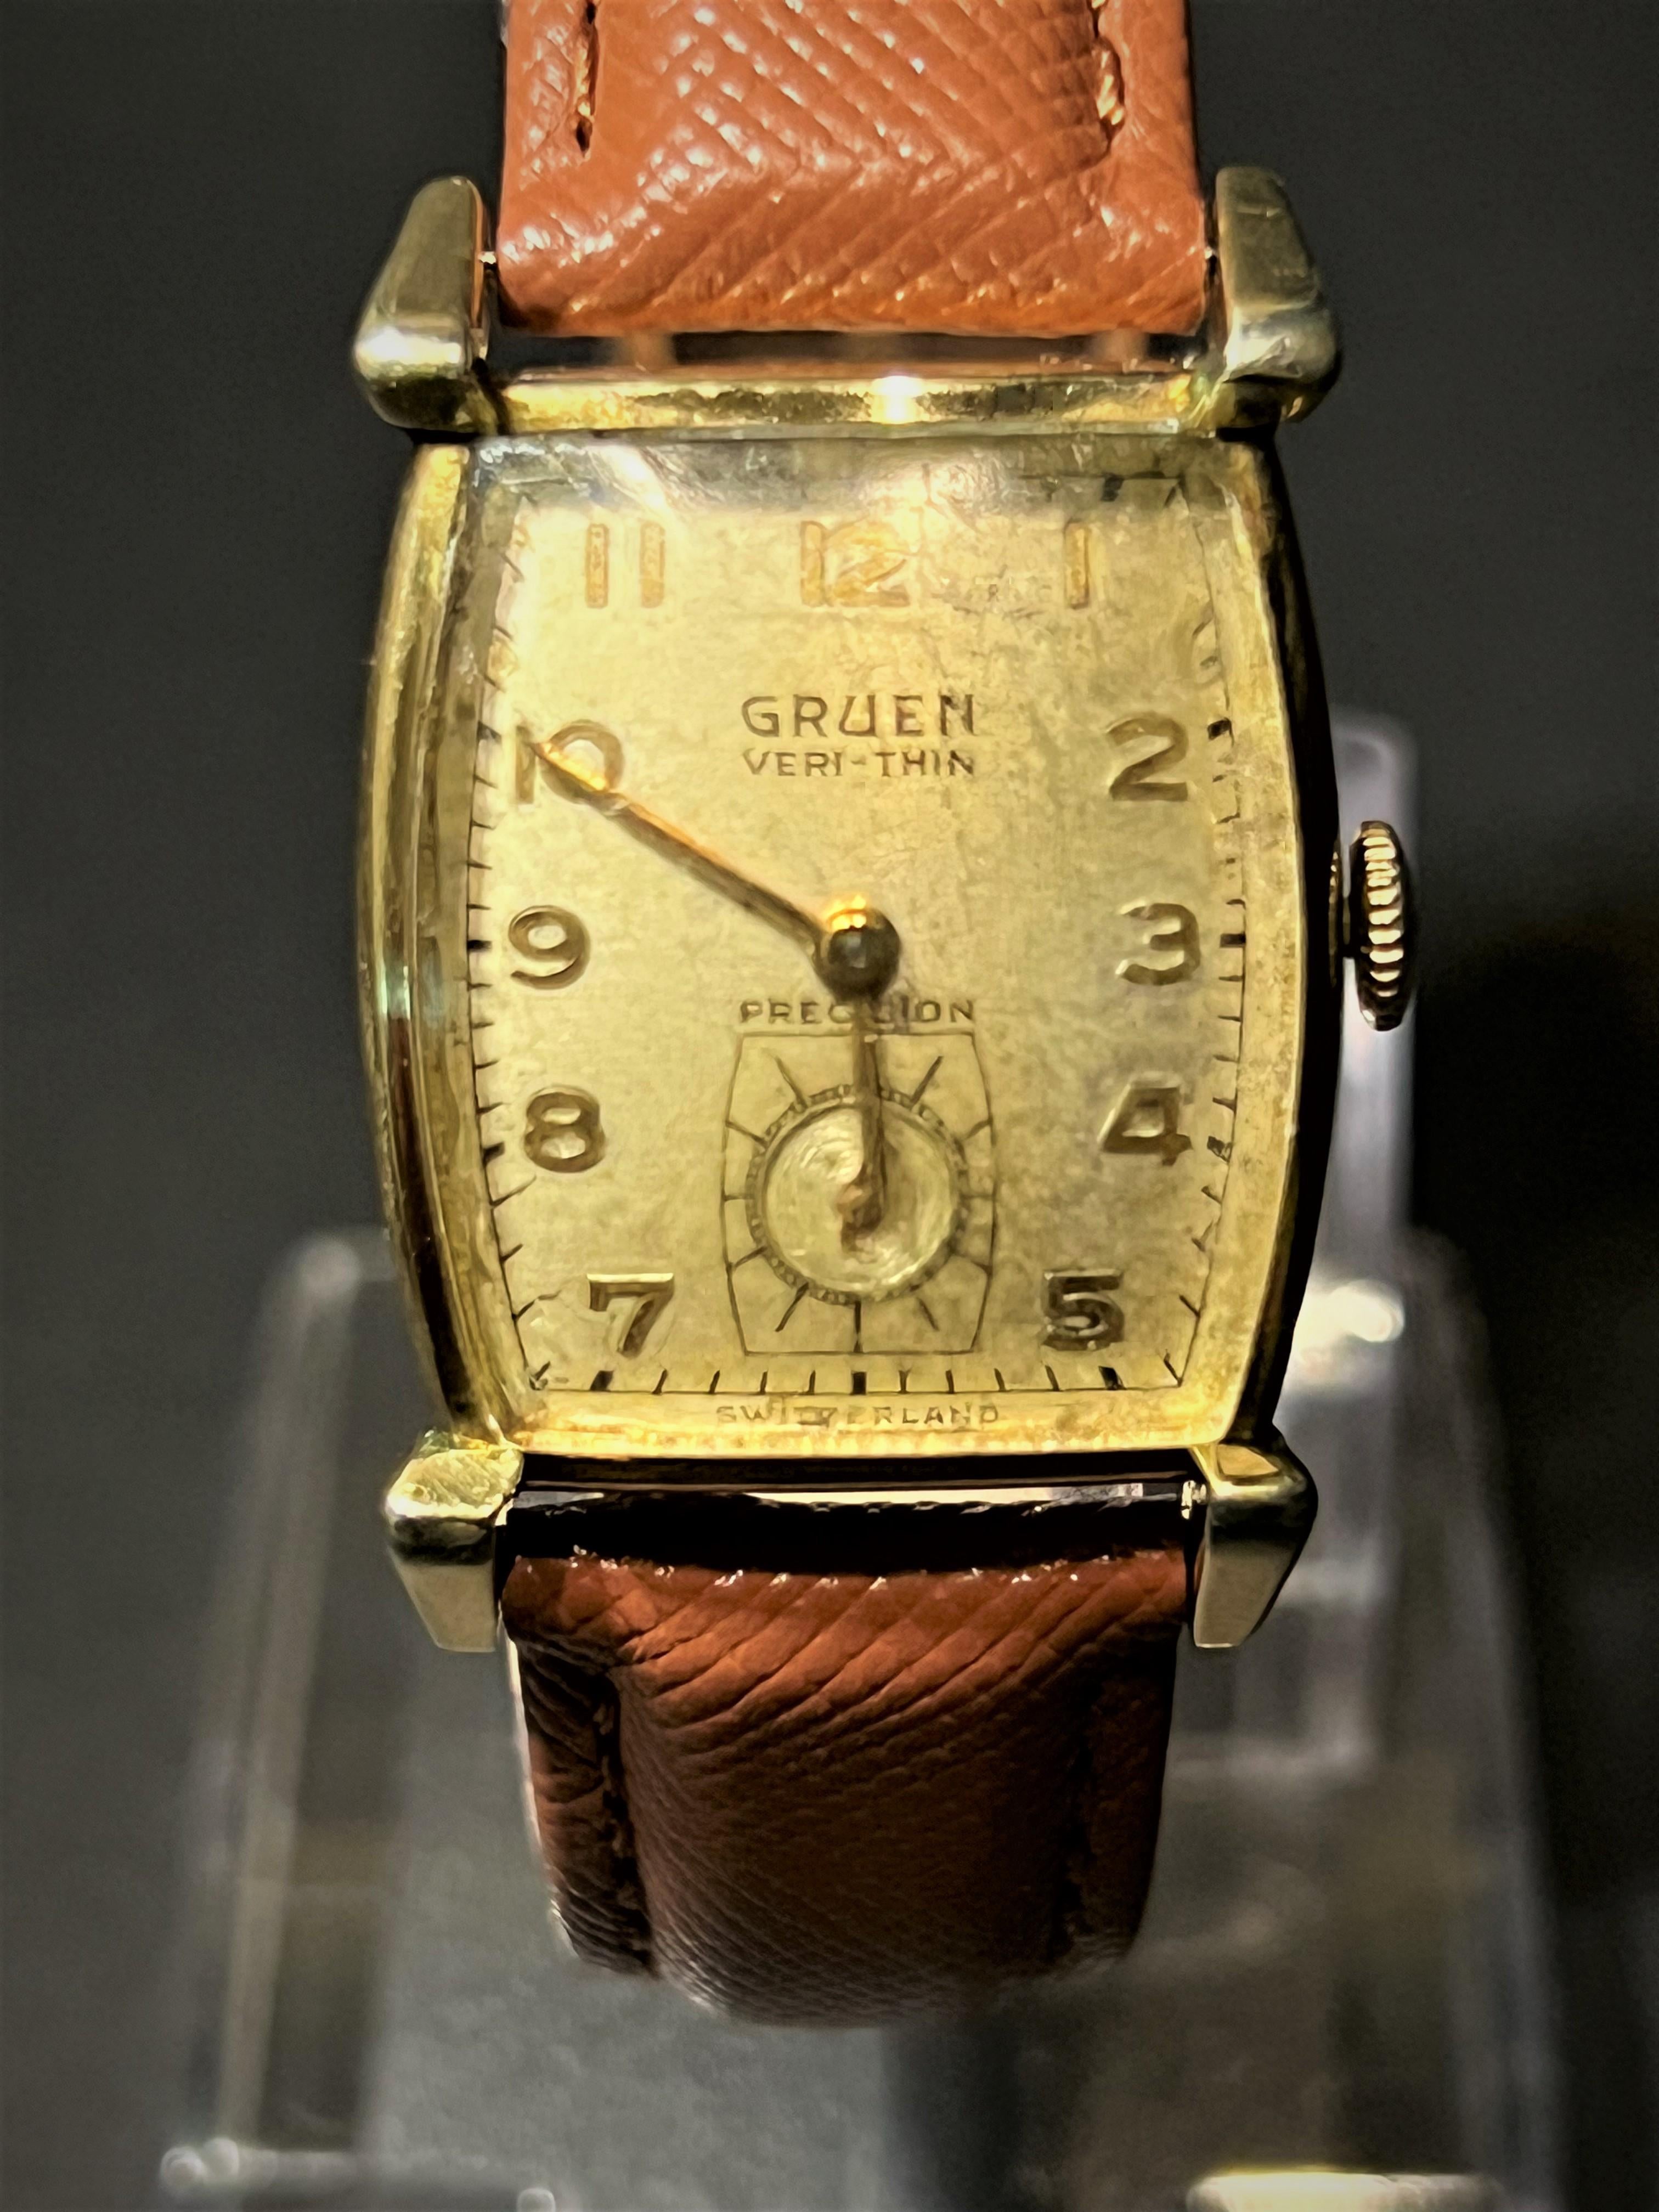 gruen watch